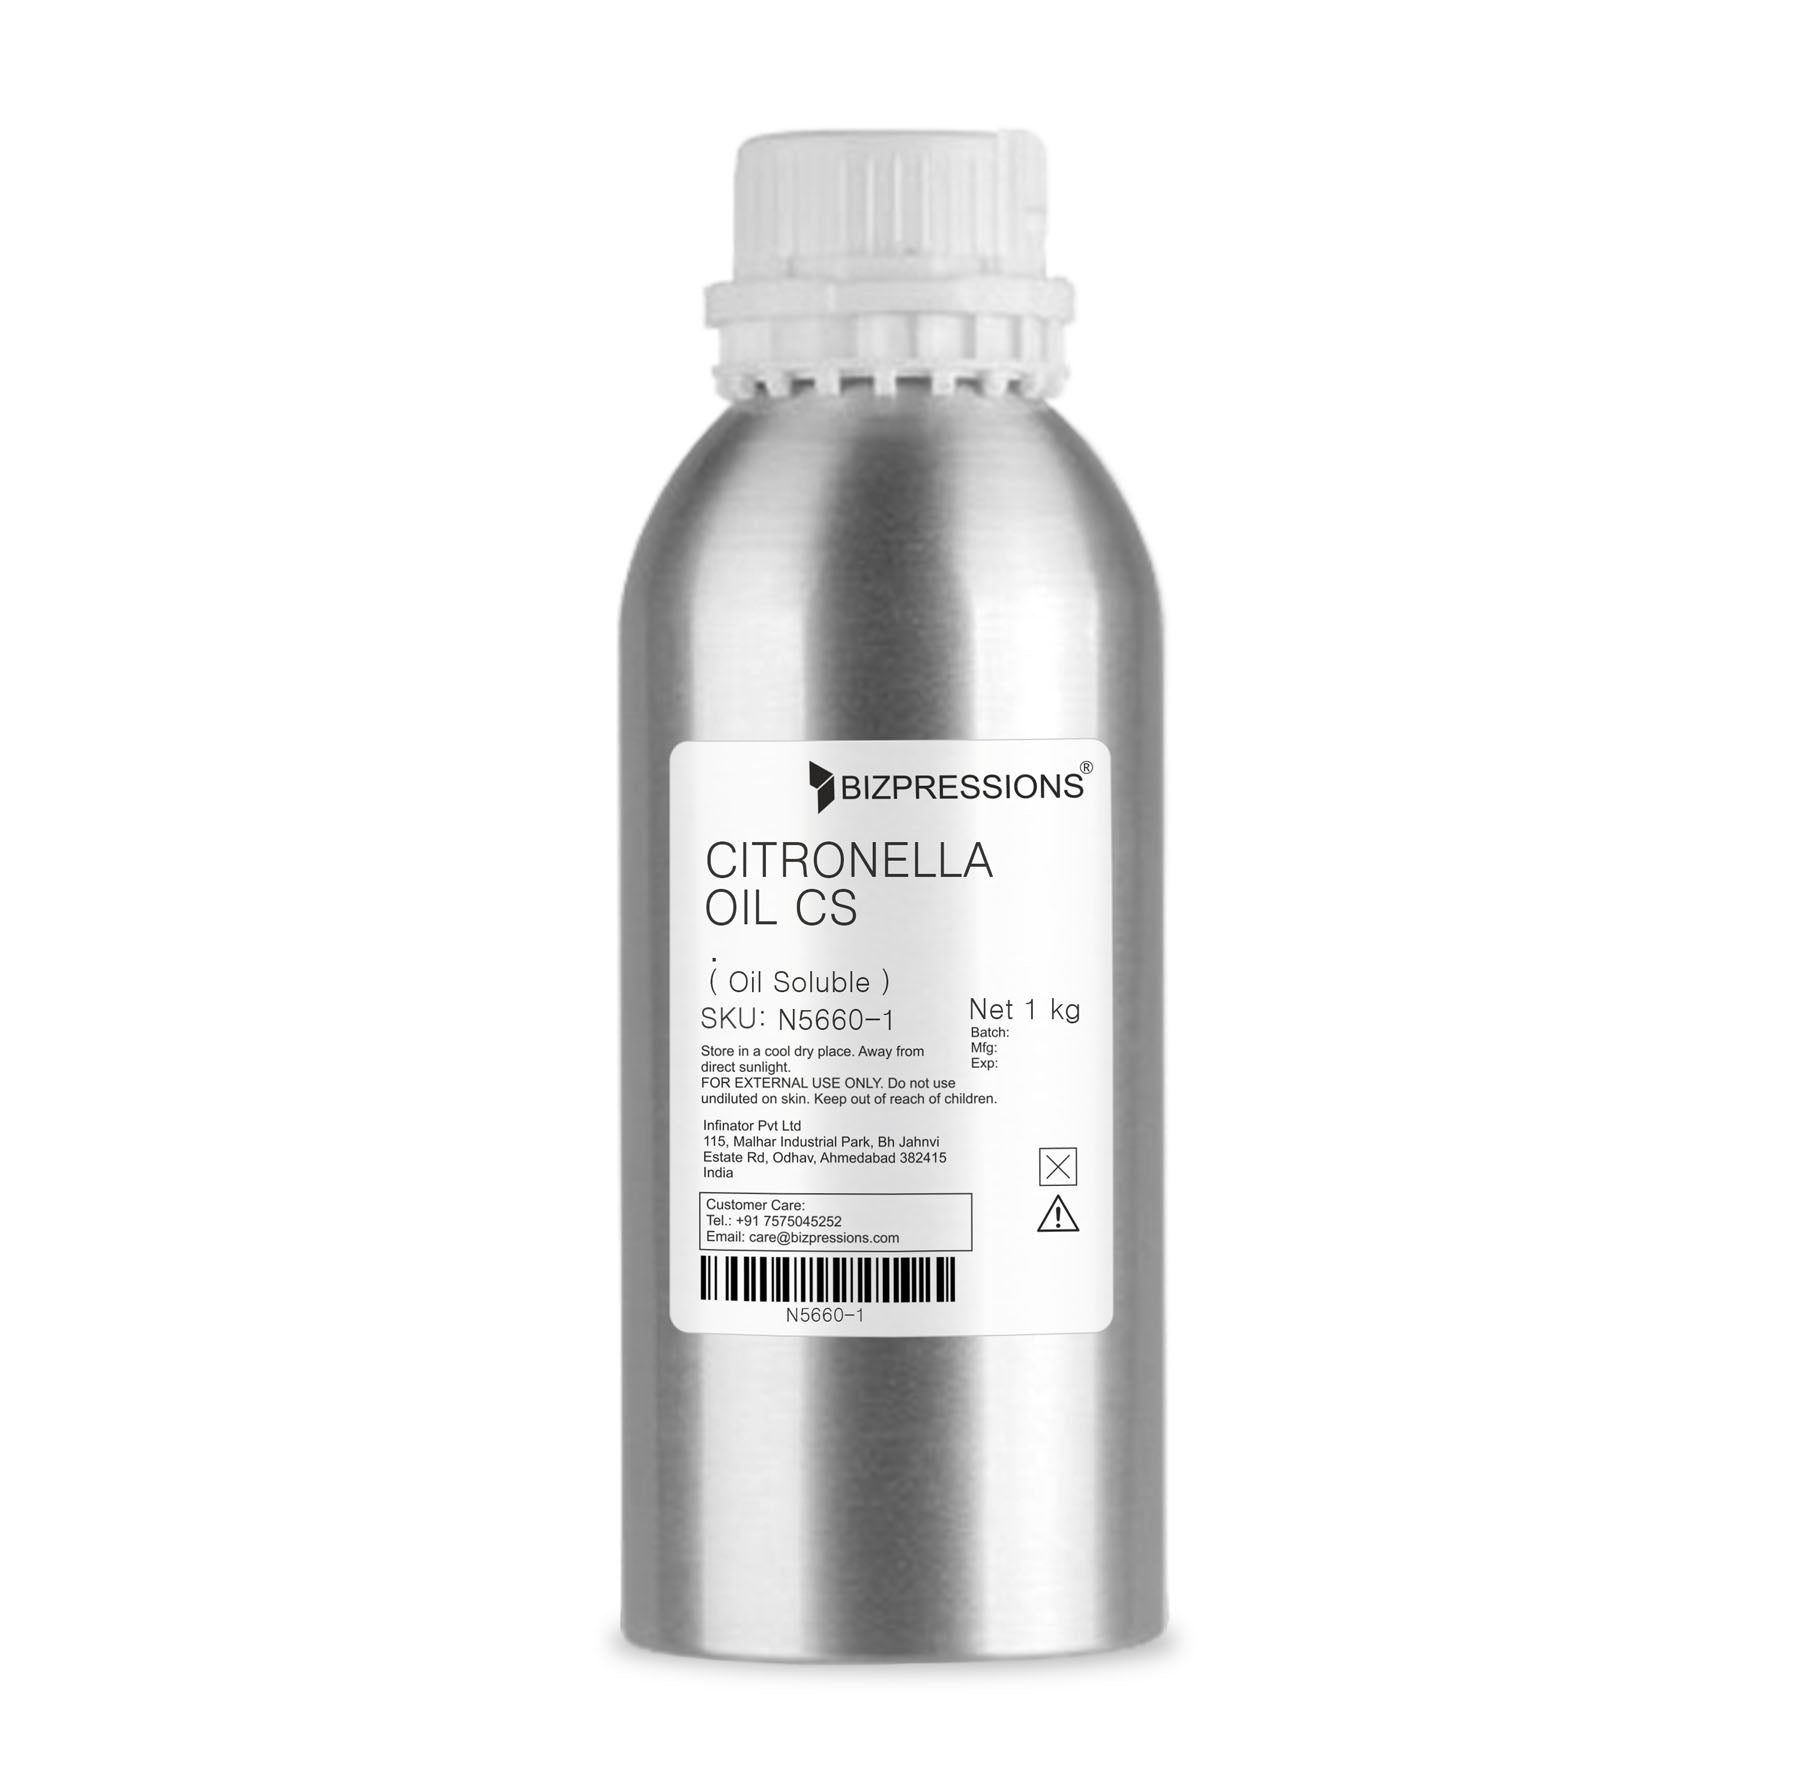 CITRONELLA OIL CS - Fragrance ( Oil Soluble ) - 1 kg